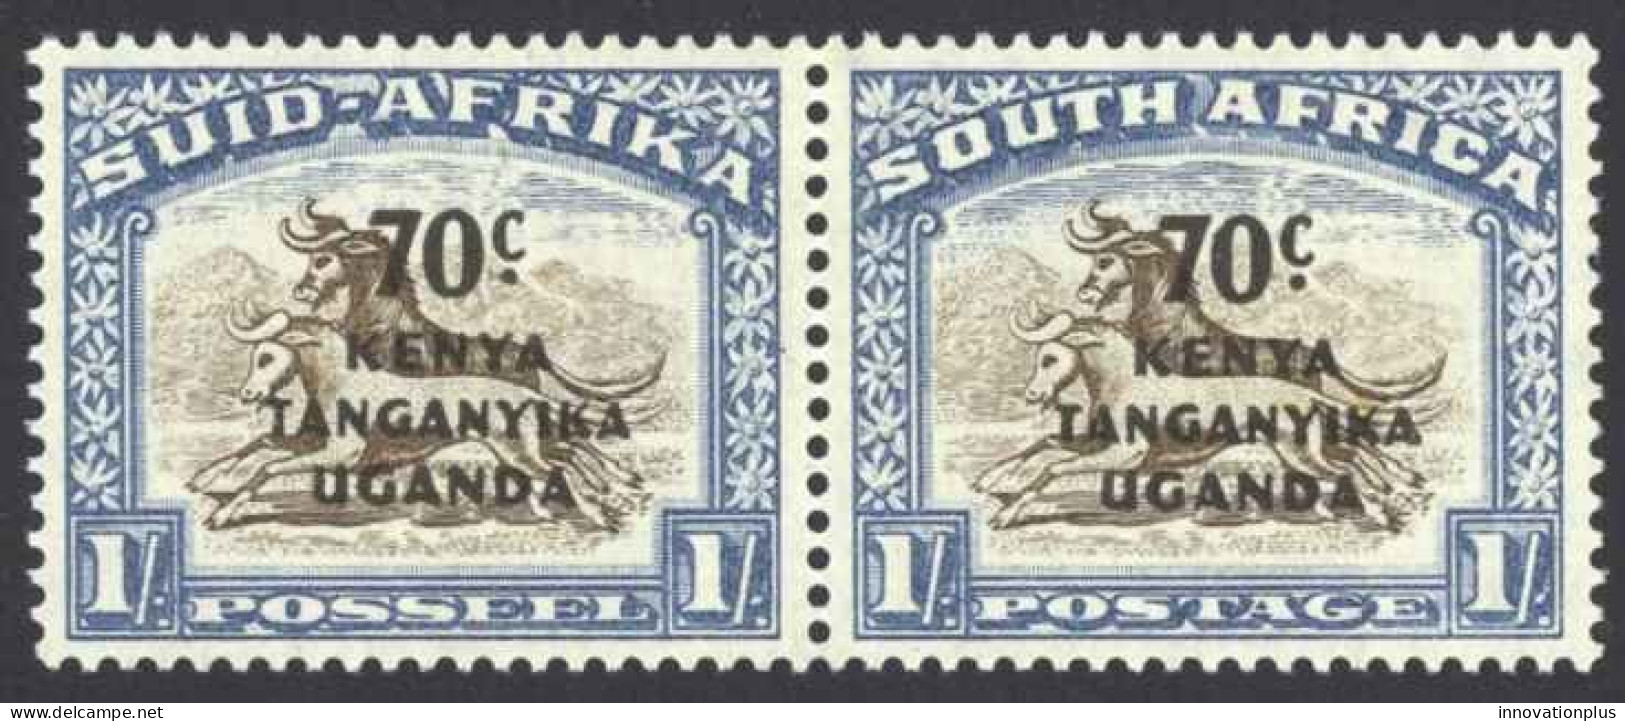 Kenya, Uganda, Tanzania Sc# 89 MH Horiz Pair 1941-1942 1sh S. Africa Overprints - Kenya, Uganda & Tanzania